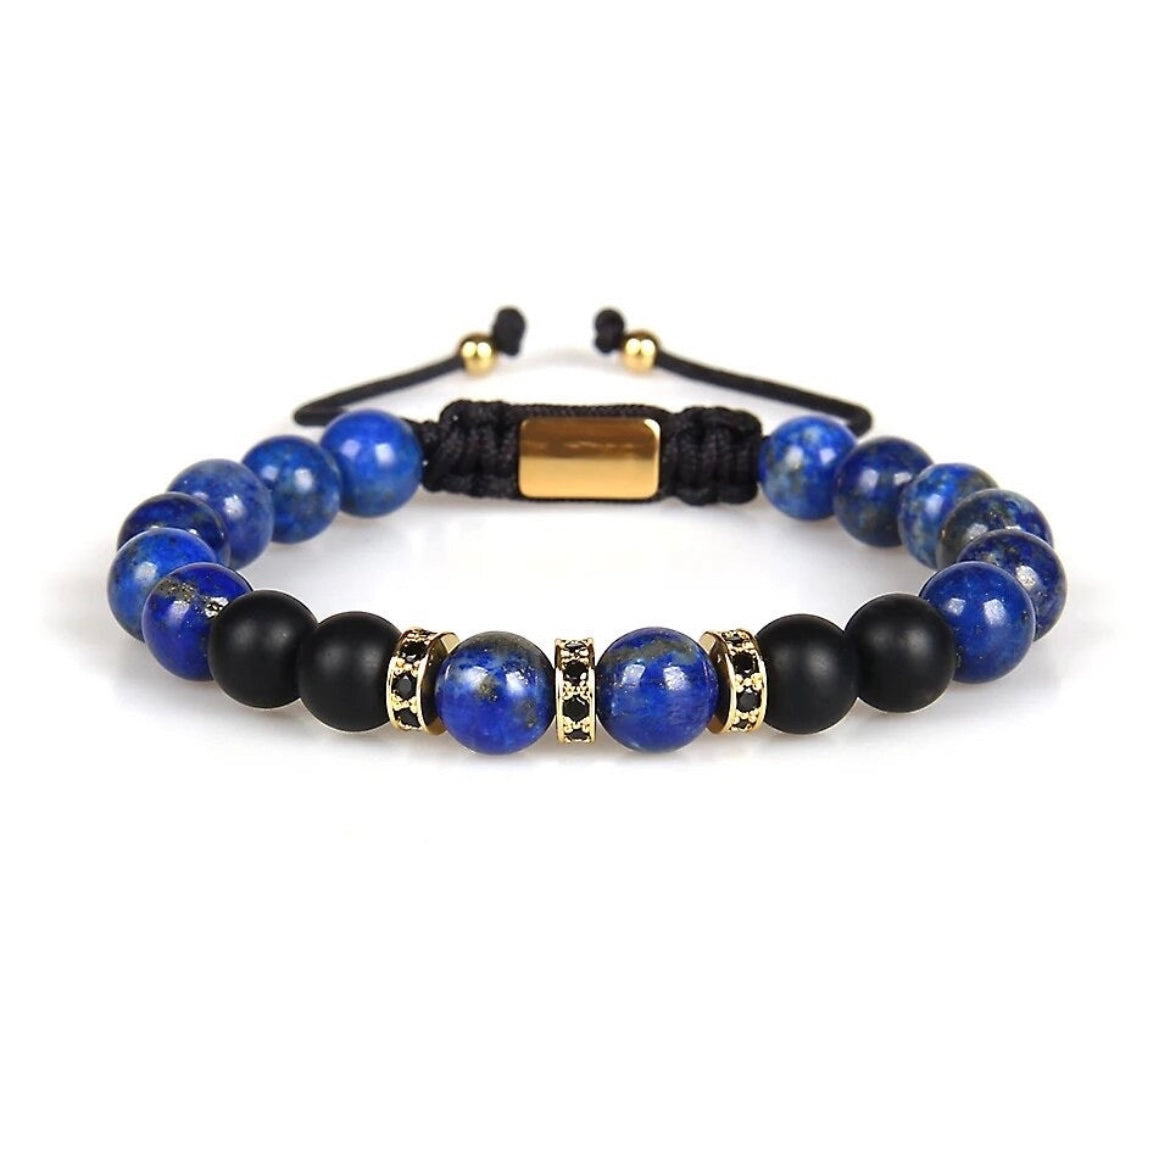 Lapis Lazuli & Black Onyx Beads Bracelet - My Harmony Tree